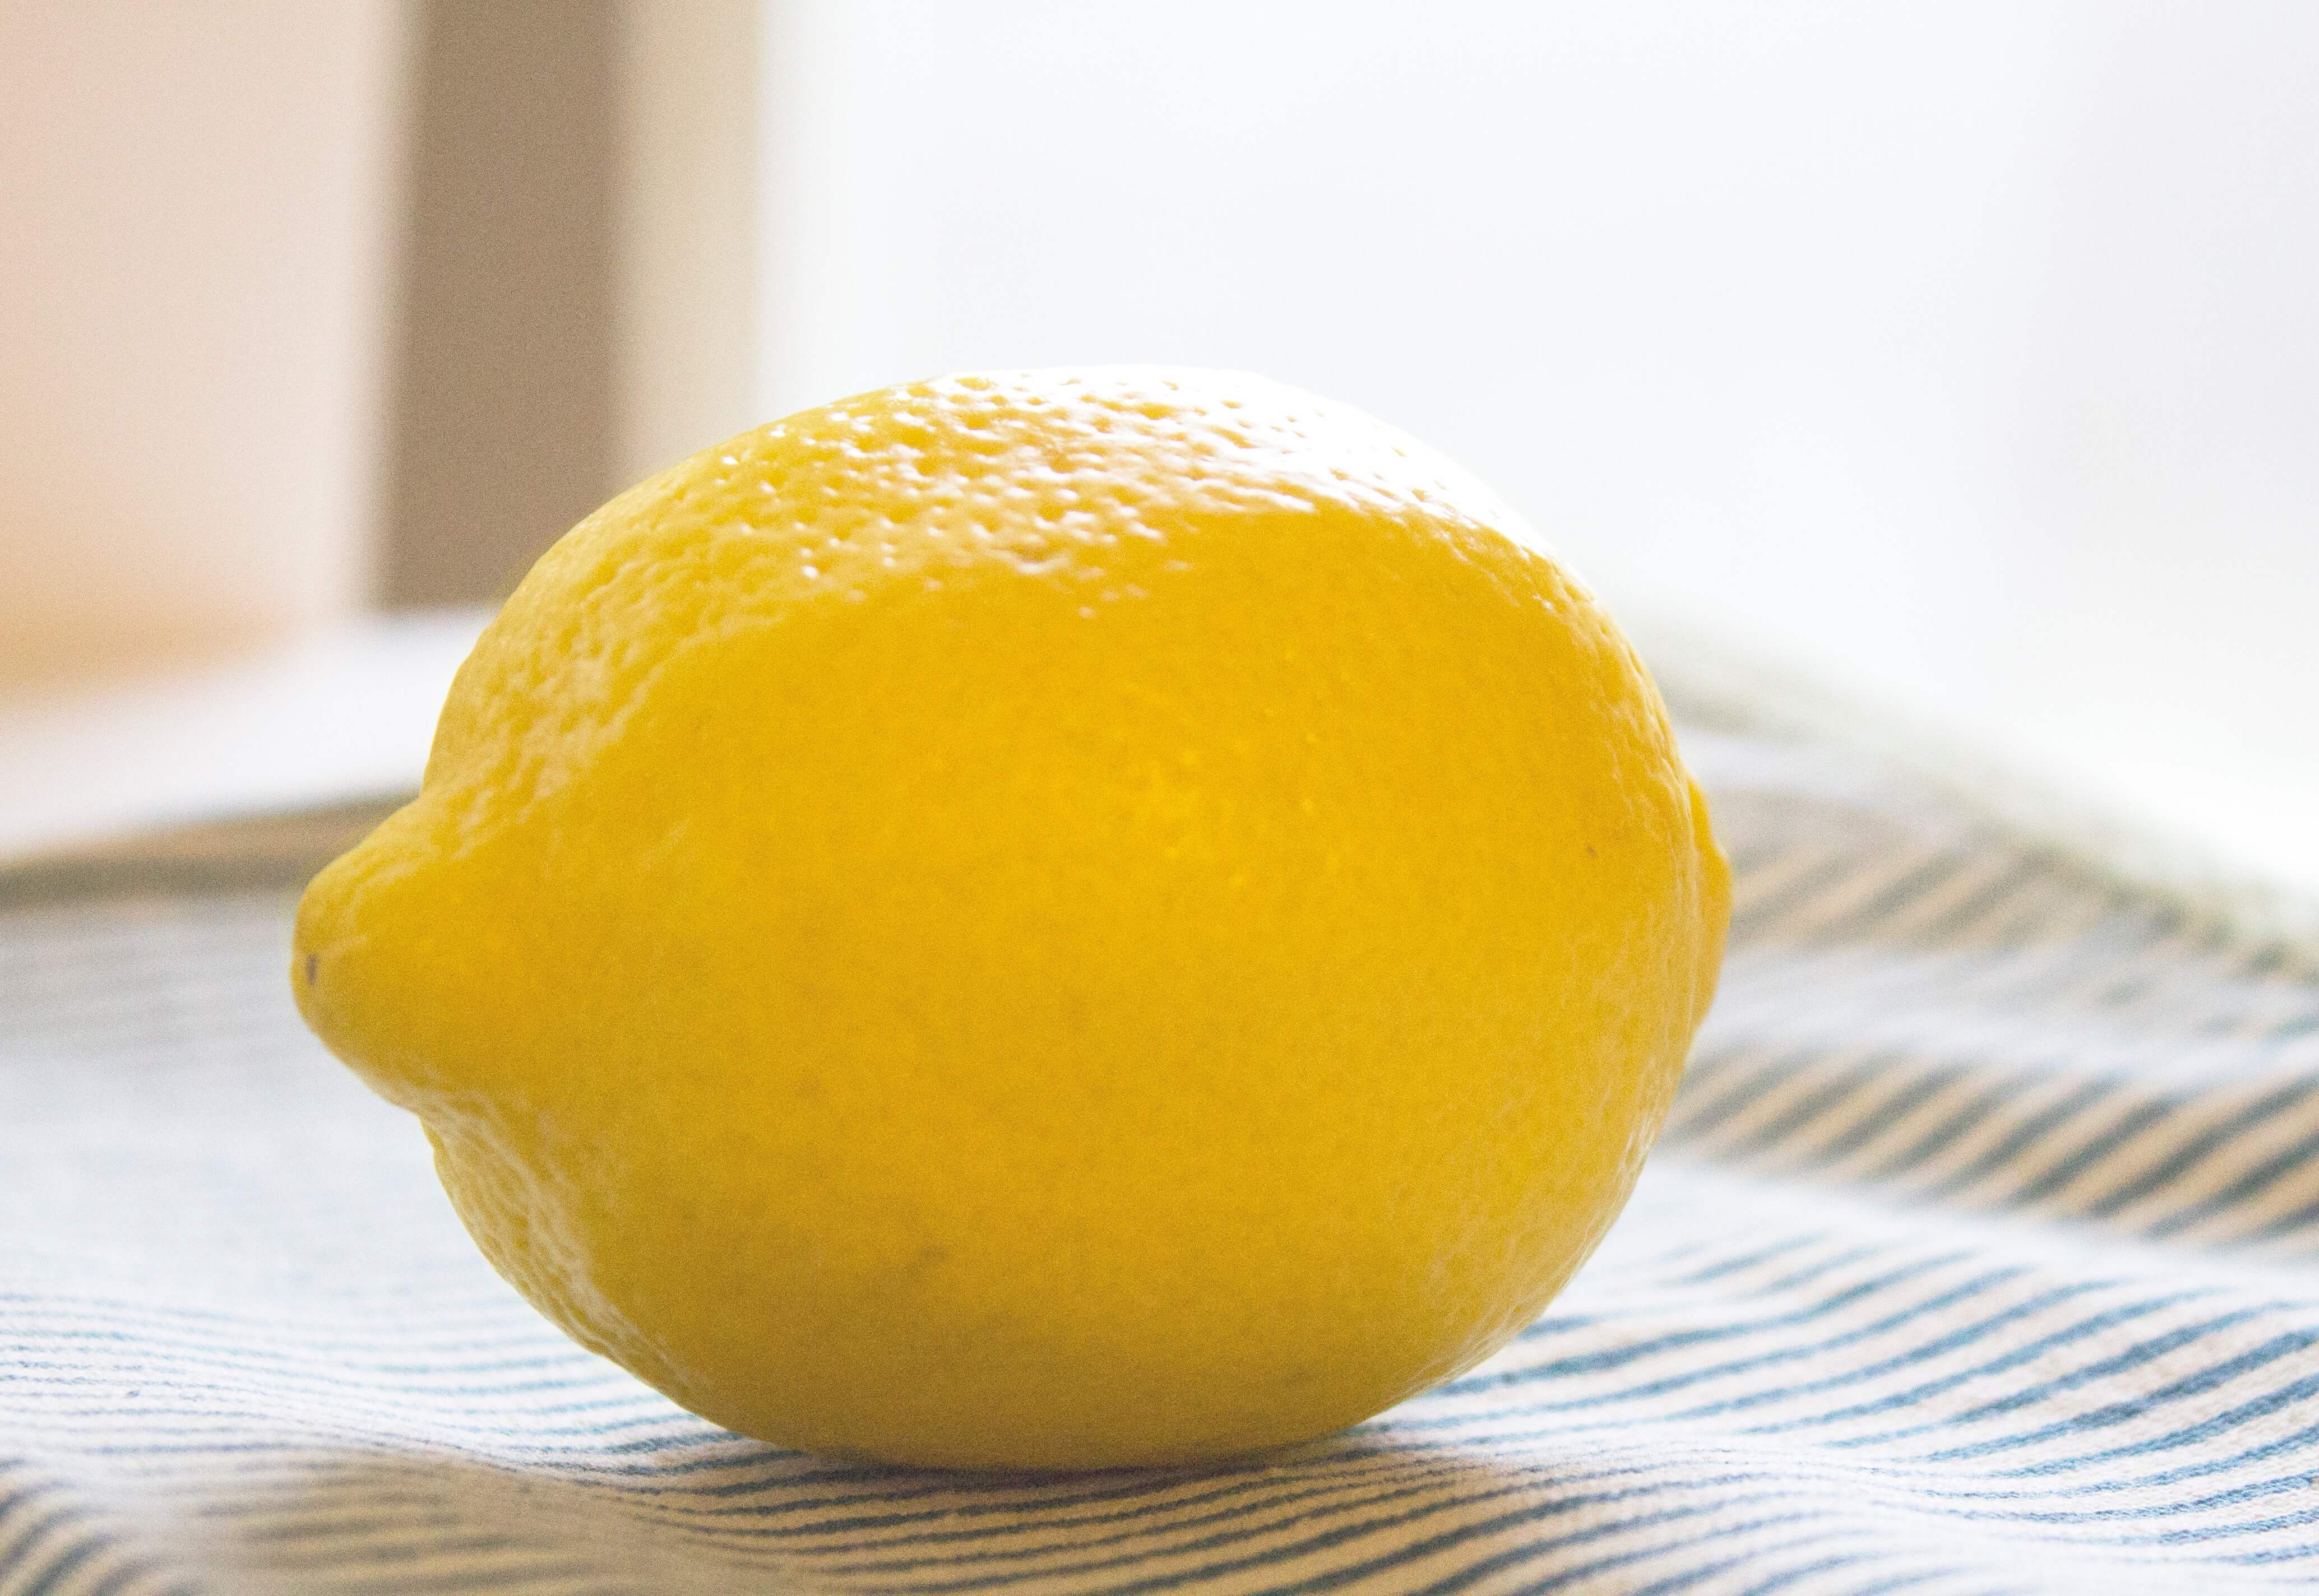 How to Make Lemon-Lime Cilantro Spaghetti Squash {gluten free, dairy free} sarahkayhoffman.com